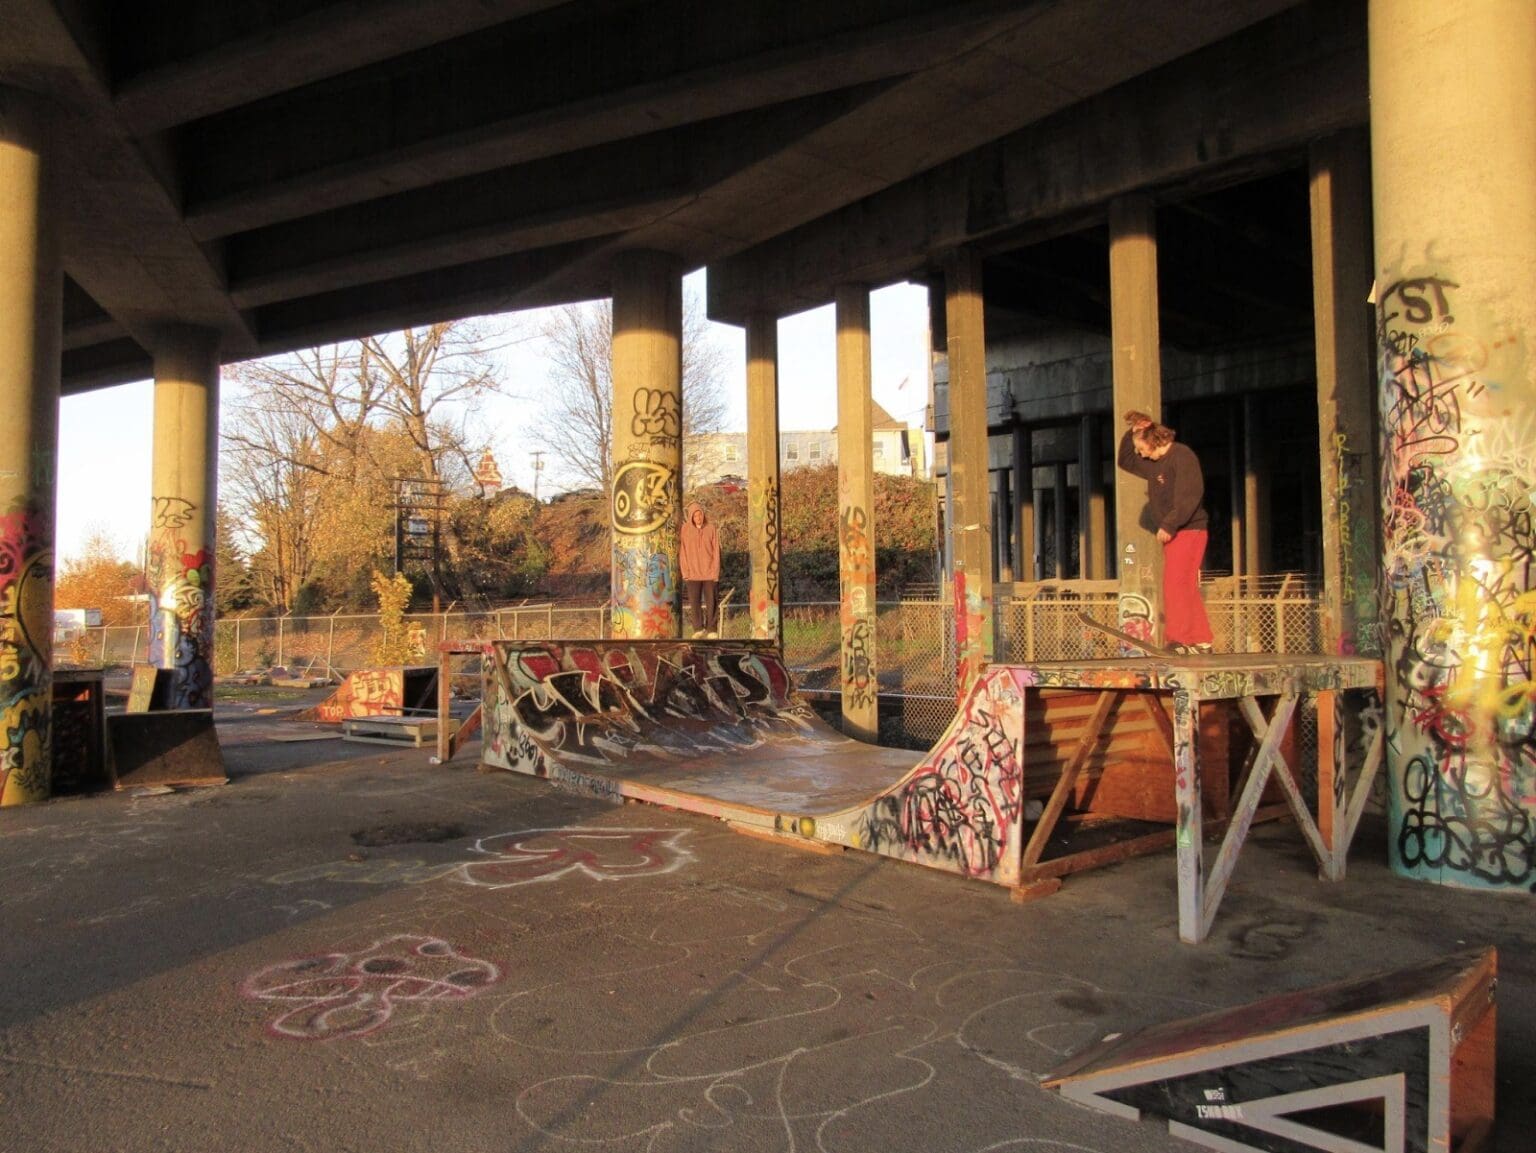 The skatepark under the Roeder Avenue bridge was built by Bellingham skaters